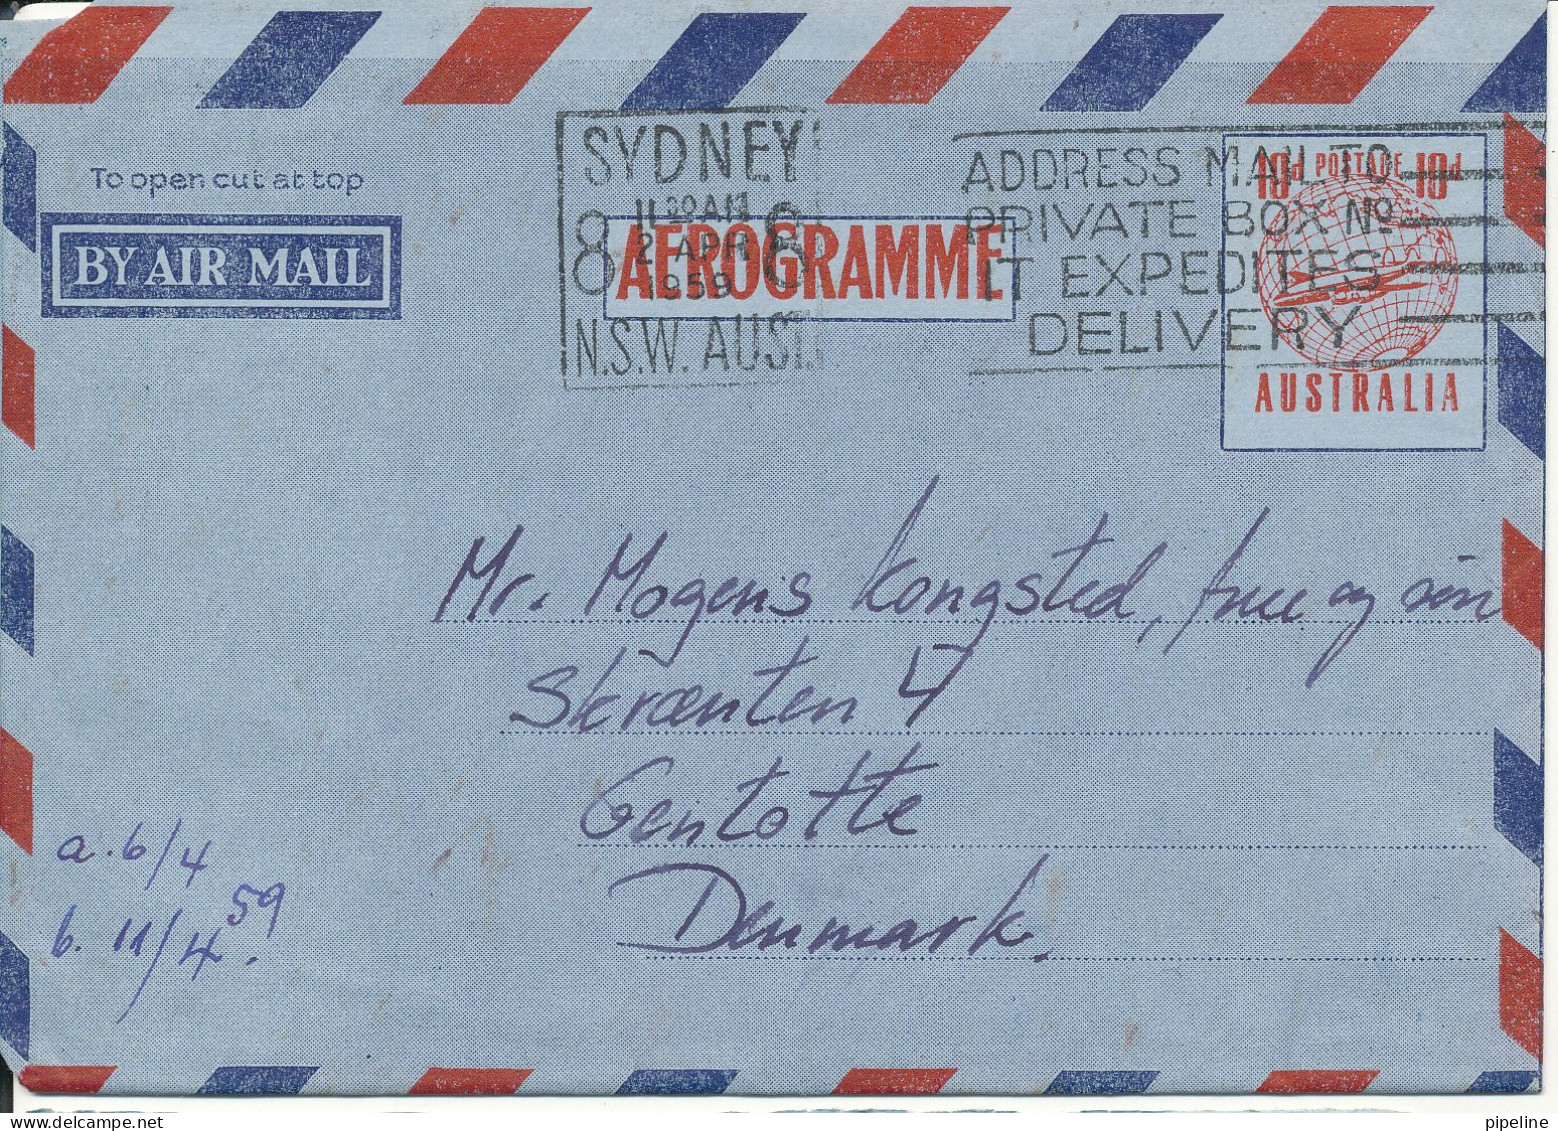 Australia Aerogramme Sent To Denmark Sydney 27-4-1959 - Aerogramme